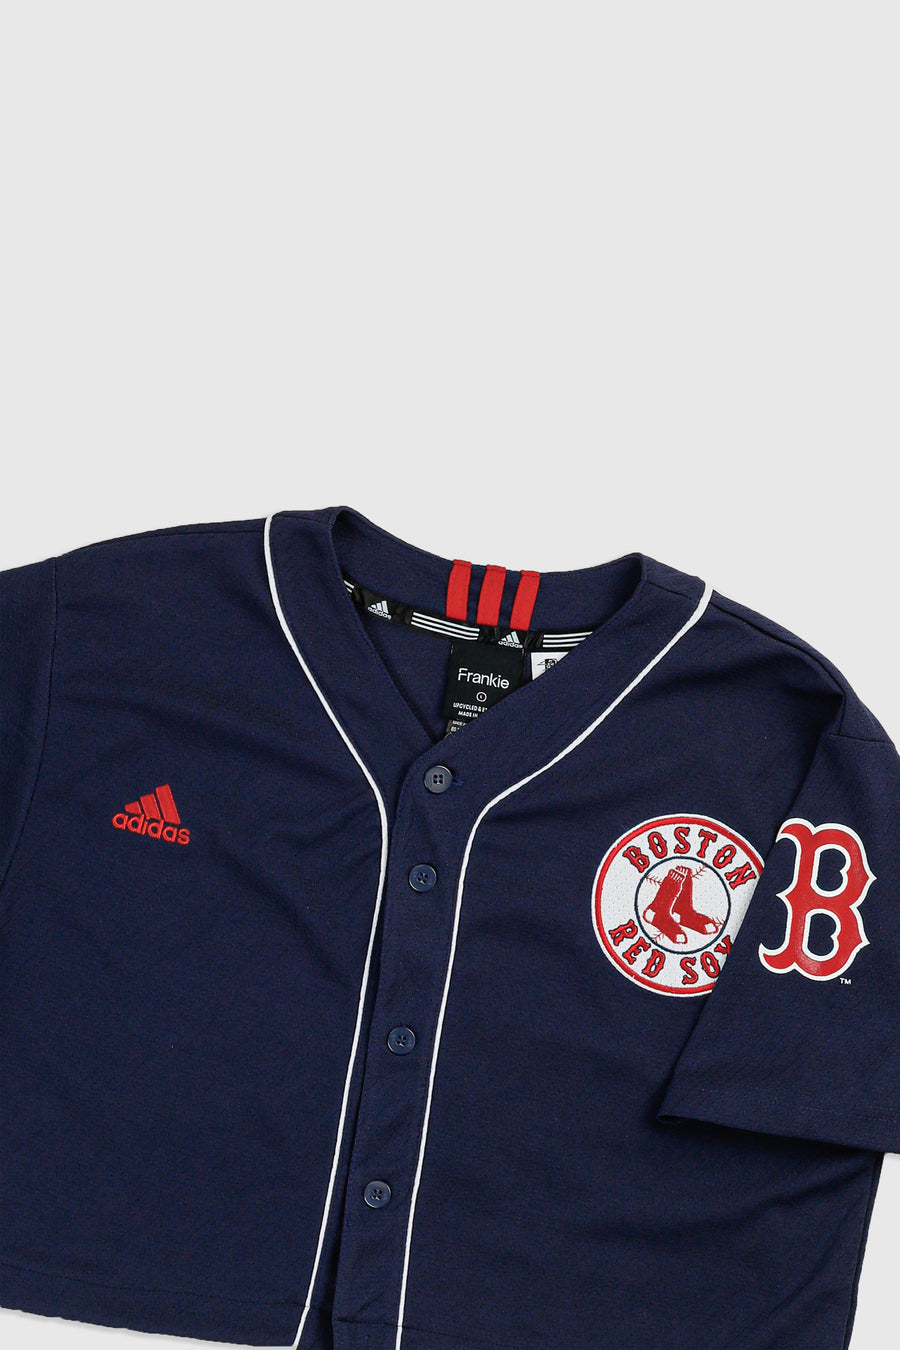 Rework Crop Boston Red Sox MLB Jersey - L